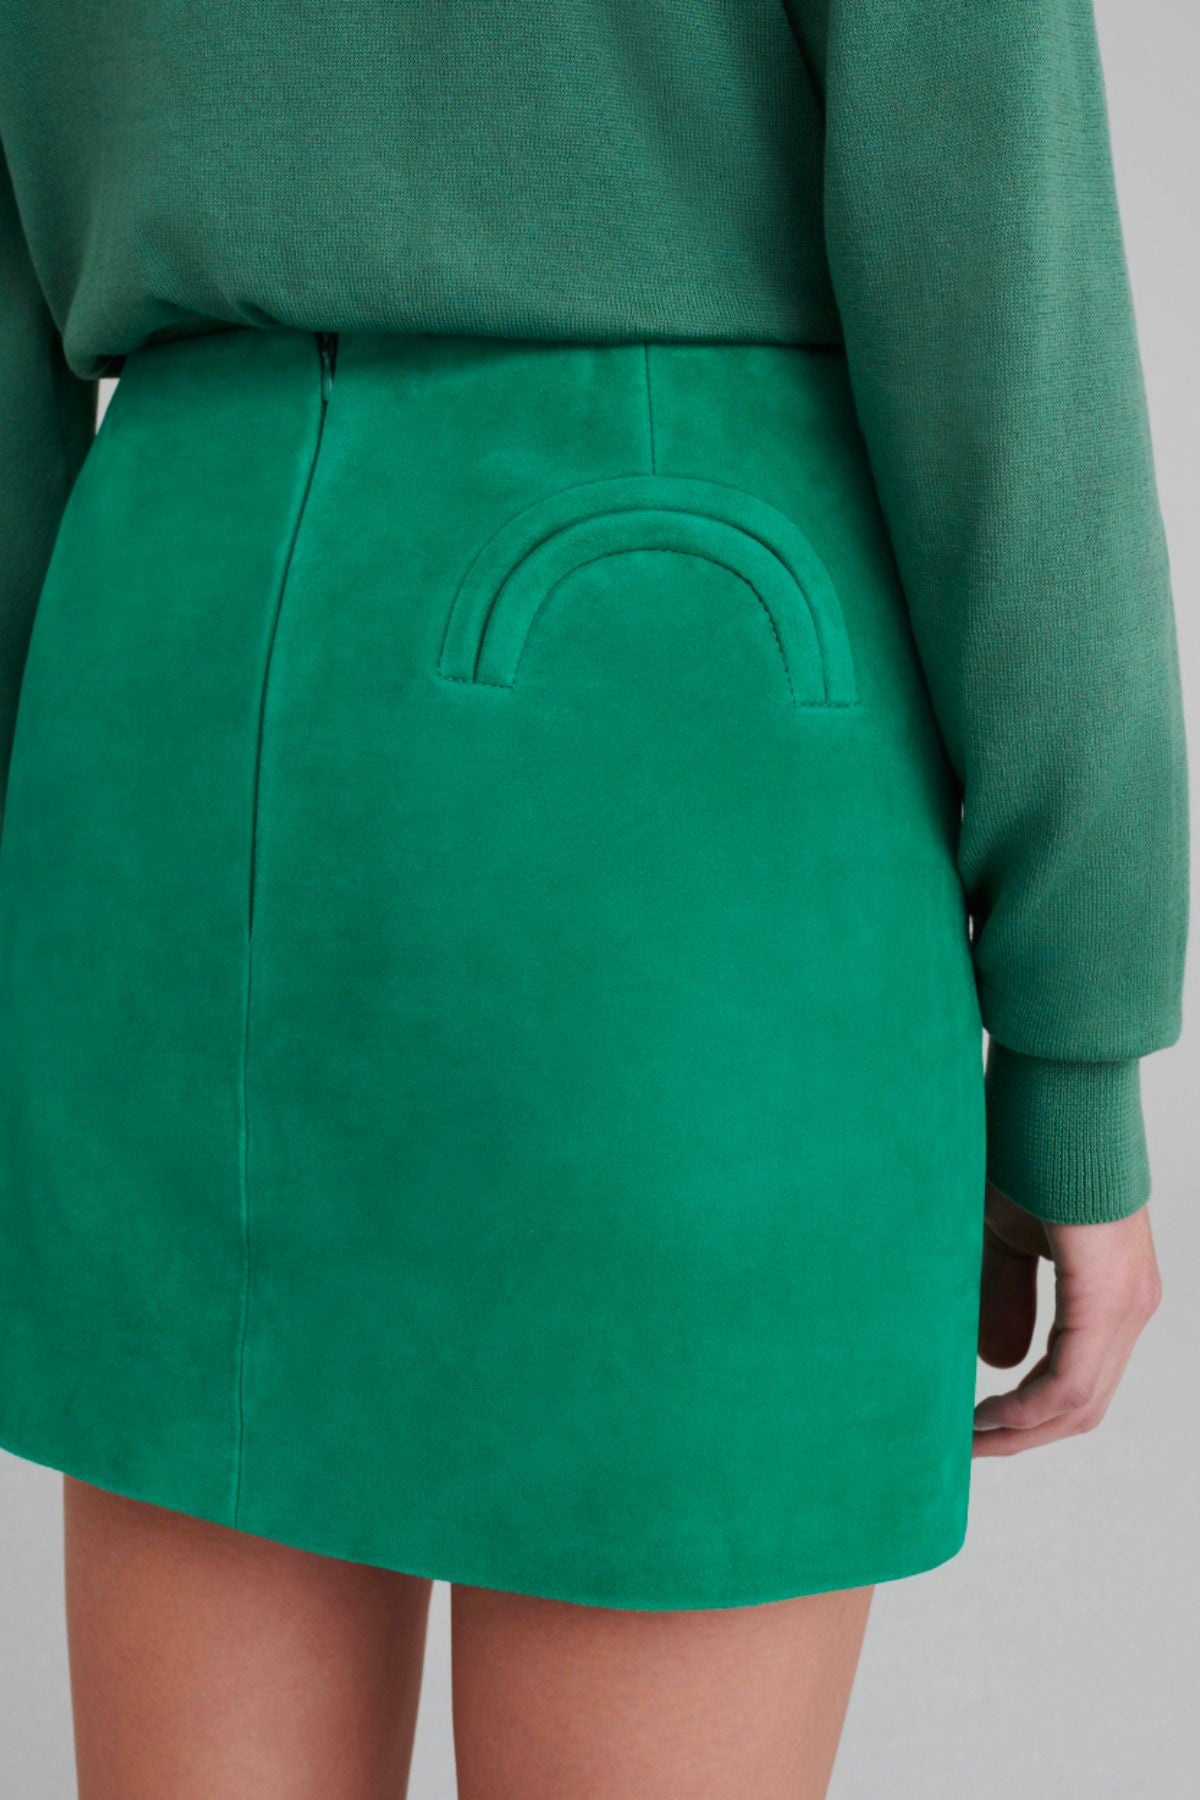 Blazé Milano Viva Coci Suede Mini Skirt - Emerald